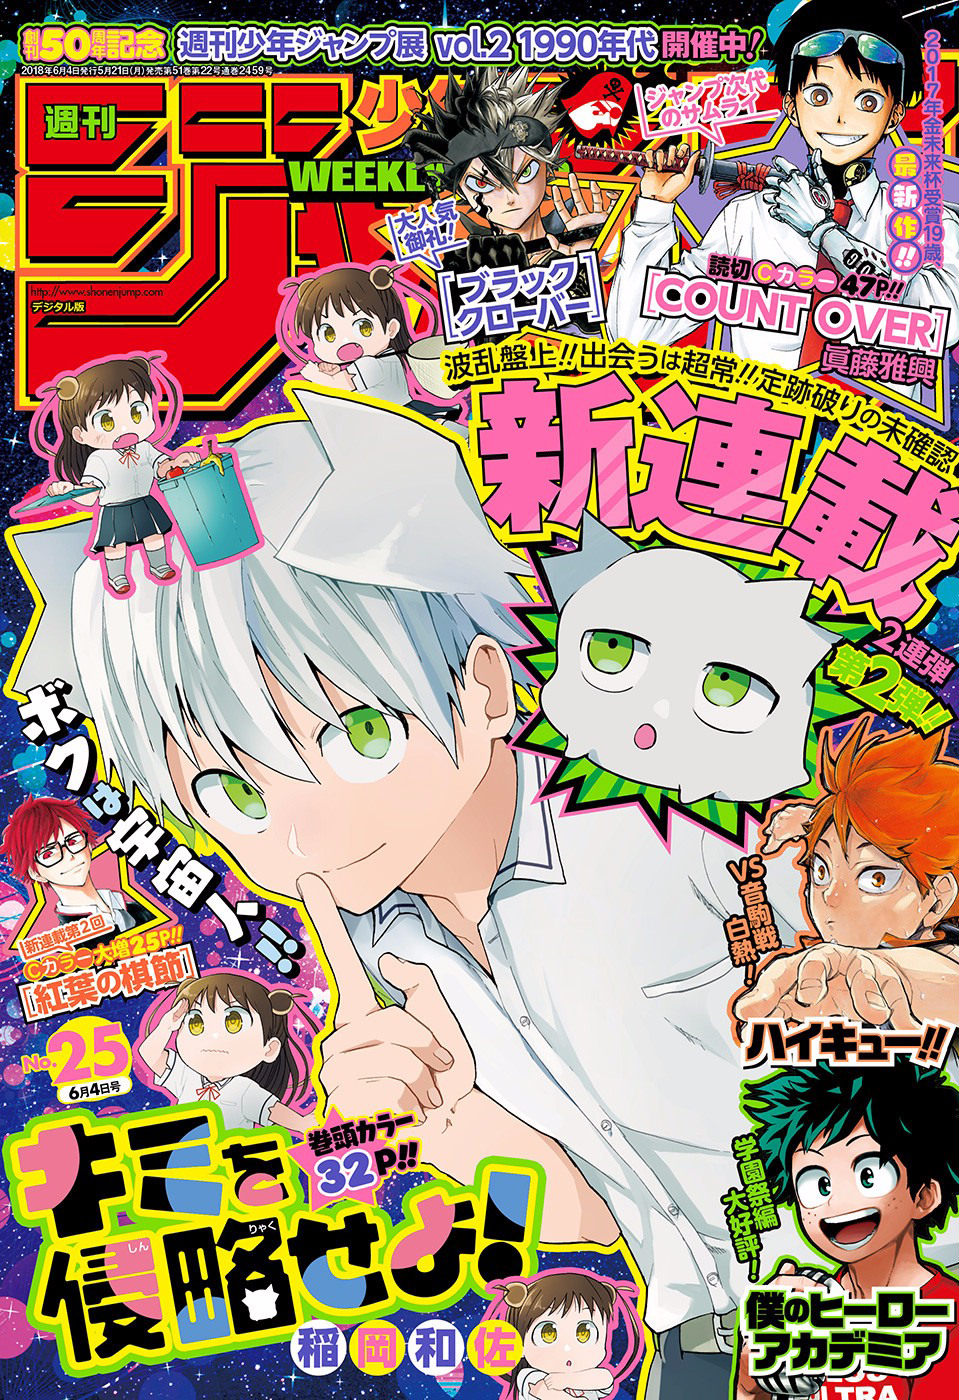 Weekly Shonen Jump Issue 25 18 Jump Database Fandom